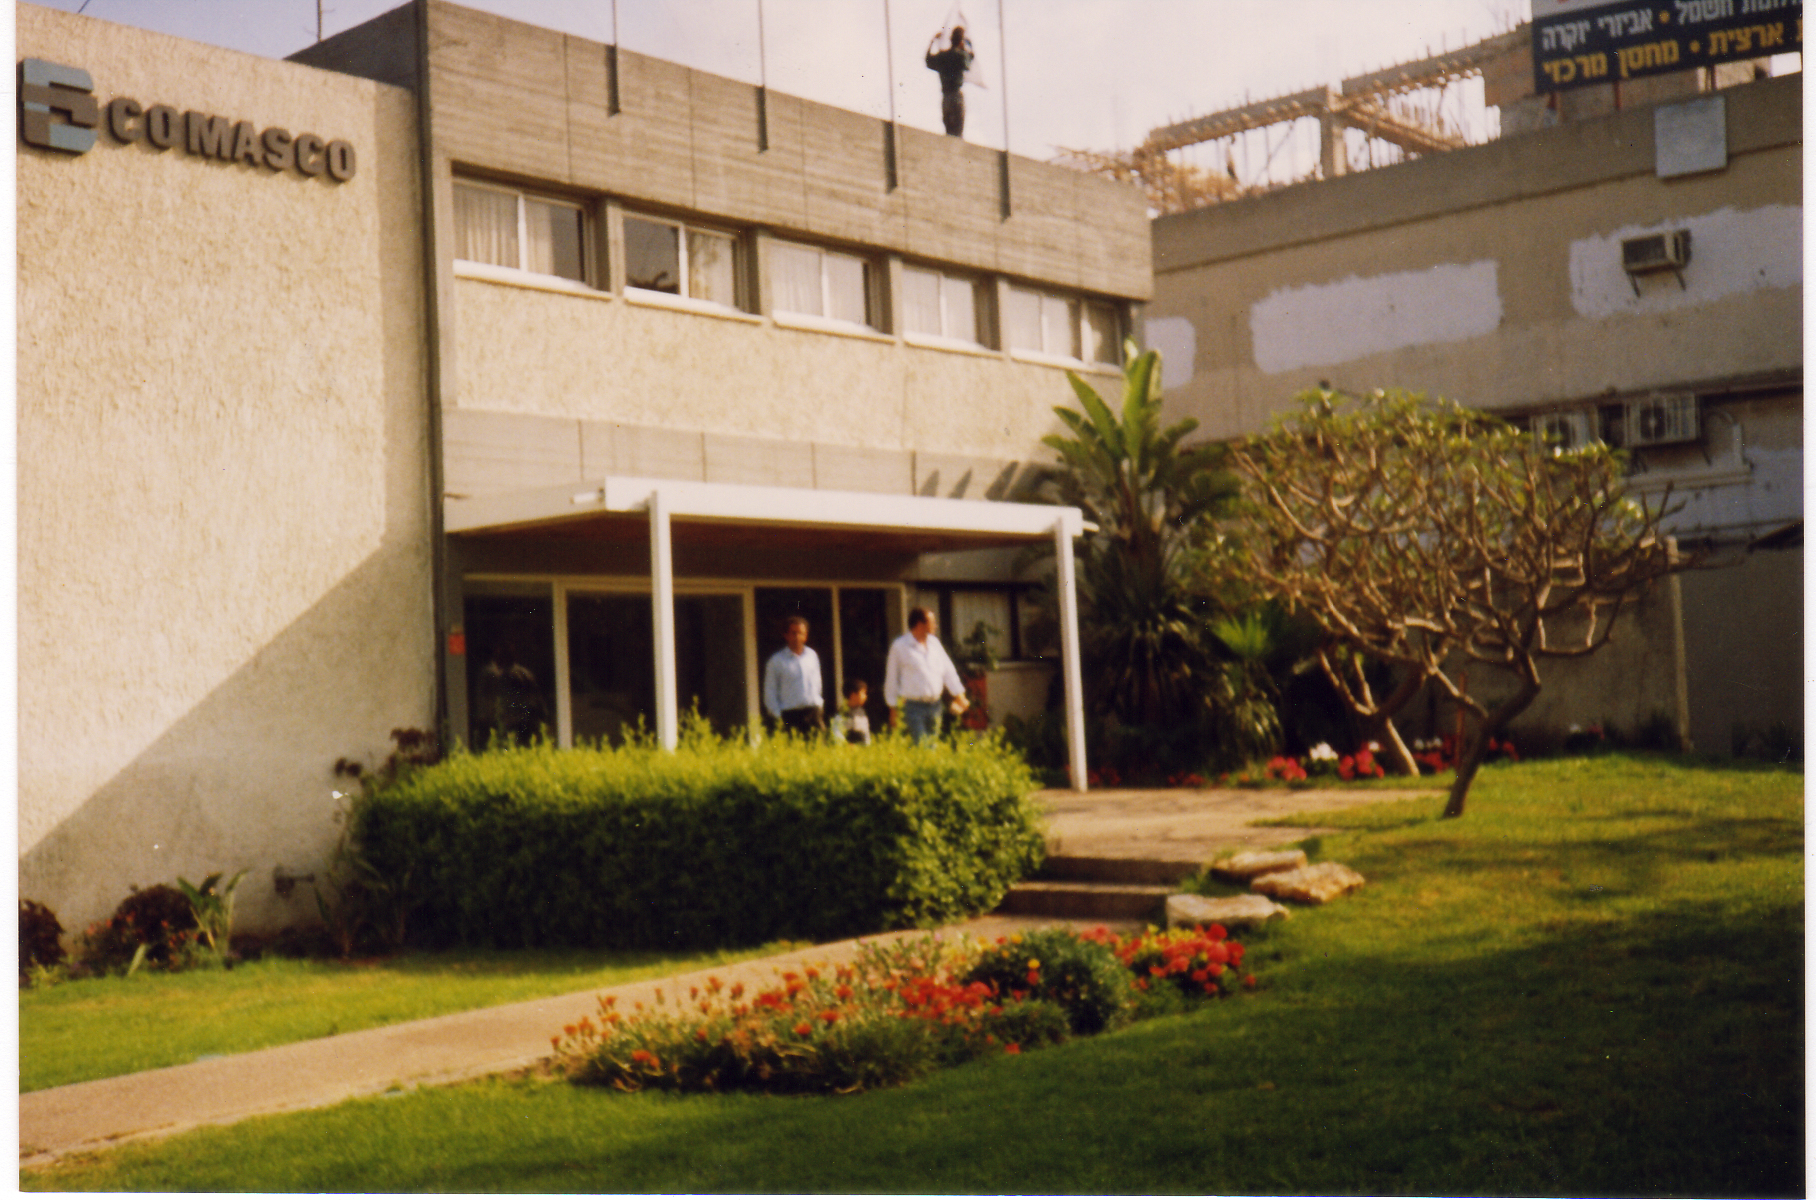 HQ enterrance at the first logistic center in Kiryat-Arye, Petah-Tikva